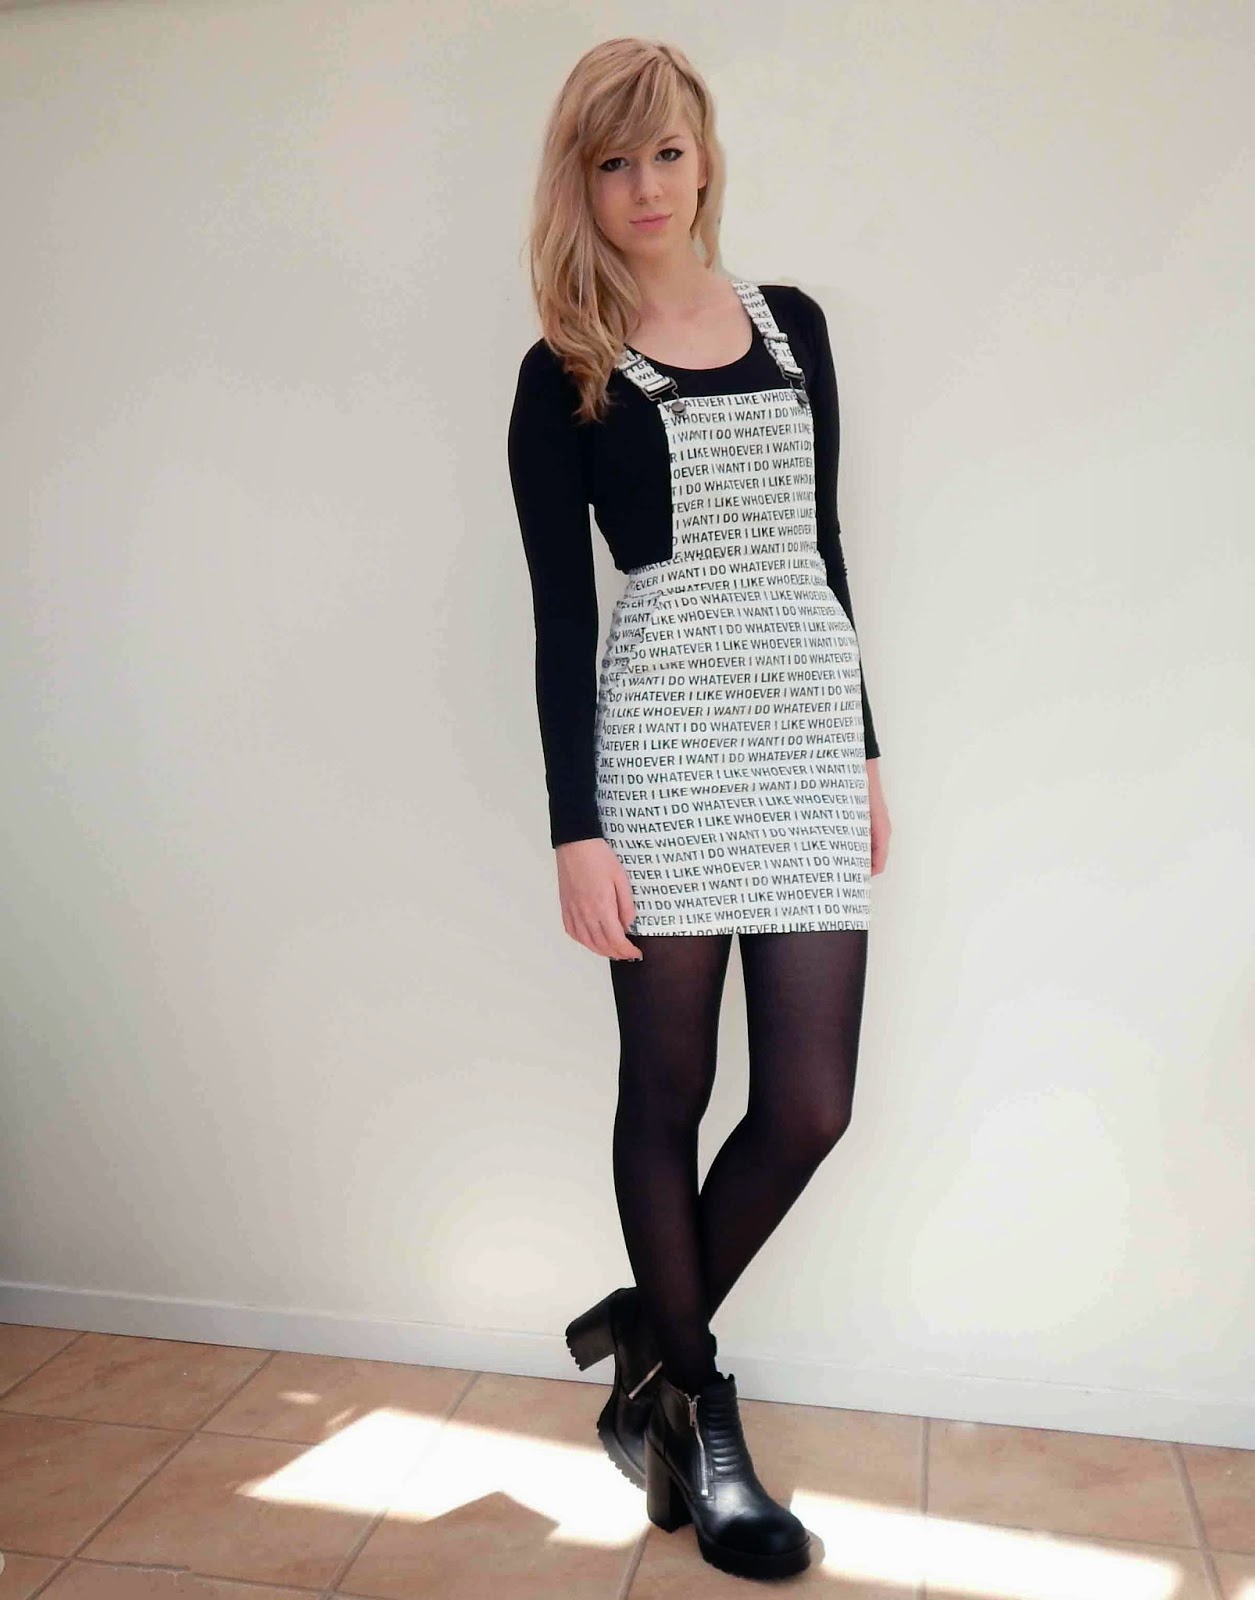 OOTD - Dungaree Dress | Juliette Stephenson - UK Fashion and Beauty Blog